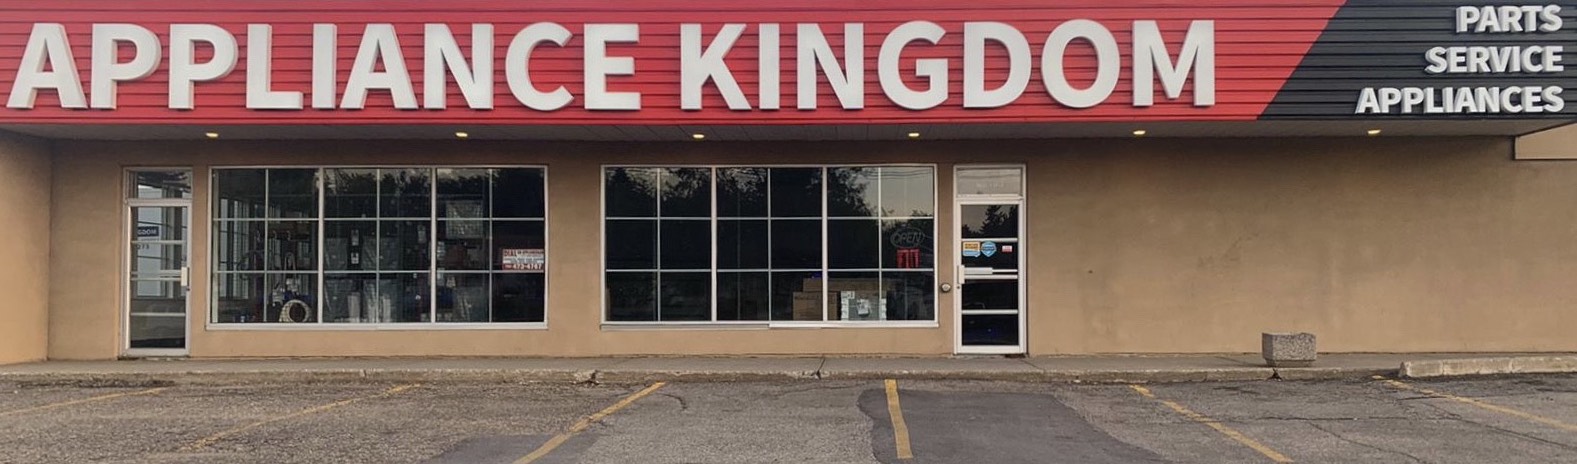 Appliance Kingdom - Edmonton Refrigerator Sales - store and showroom